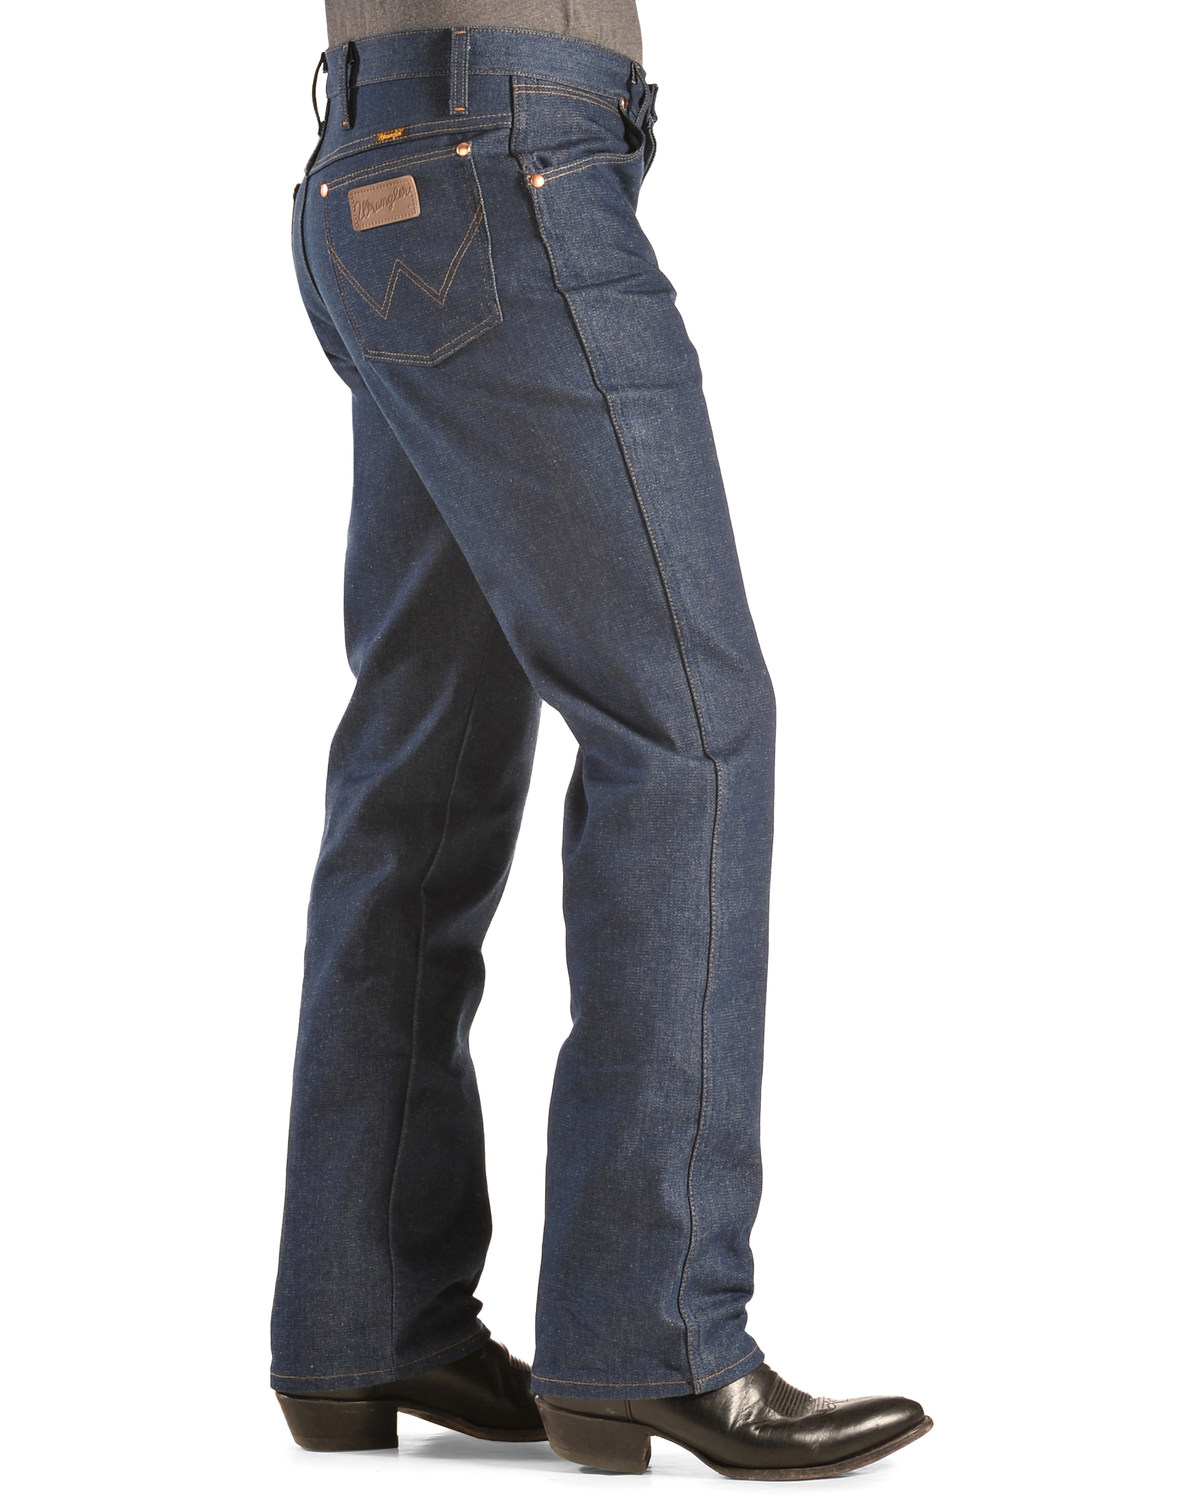 Wrangler Men's Slim Fit Rigid Jeans | Boot Barn